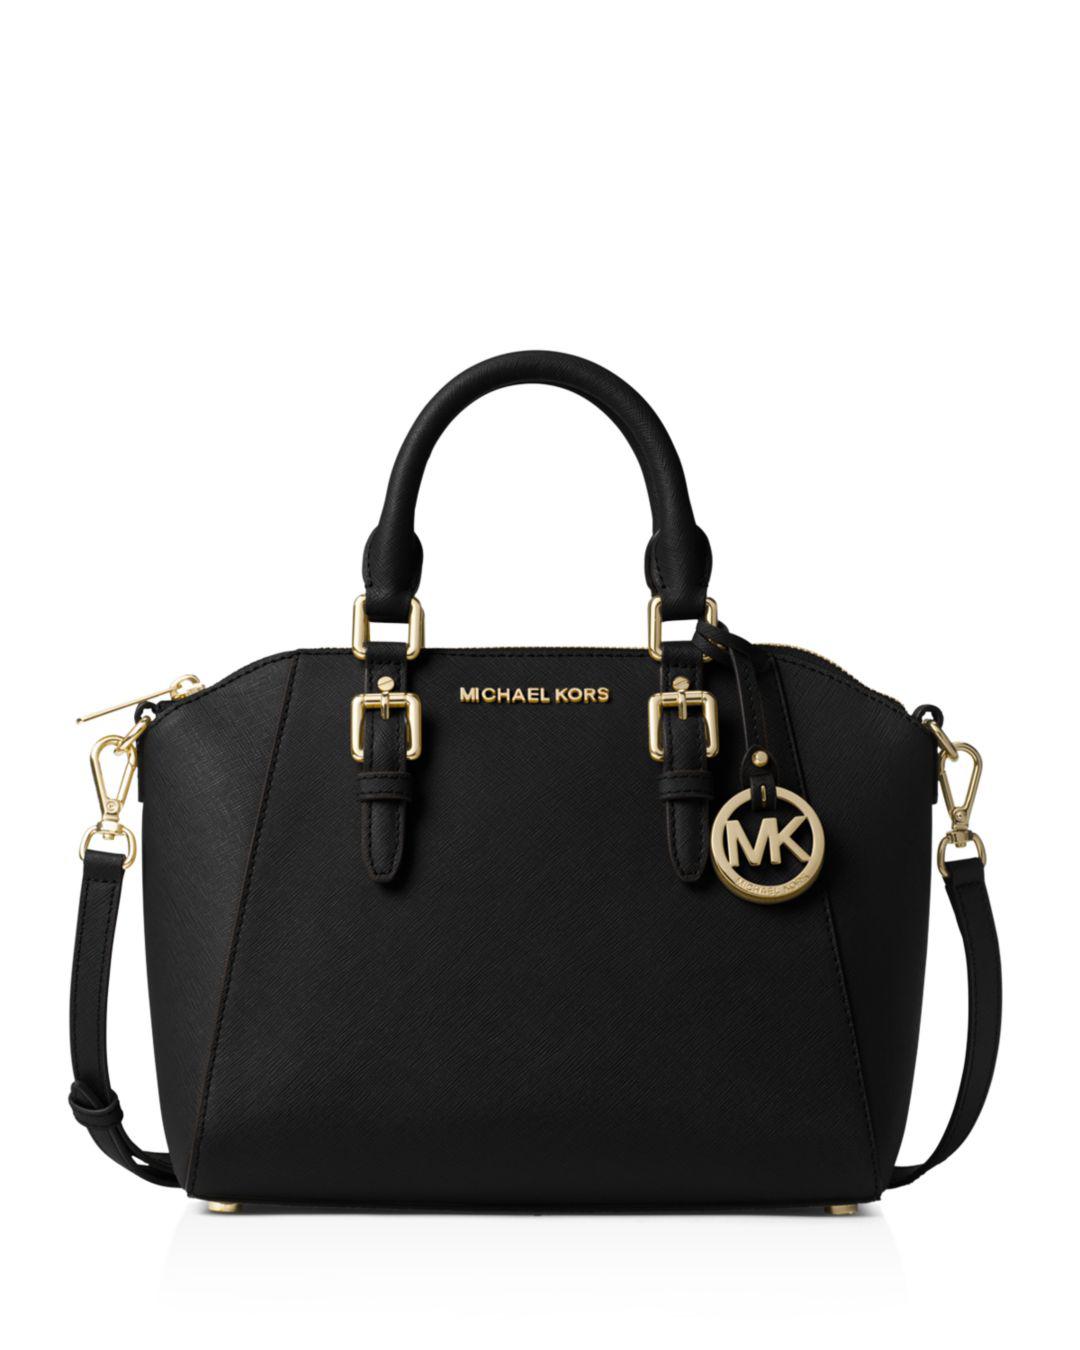 MICHAEL Michael Kors Ciara Medium Leather Messenger Bag in Black/Gold ...